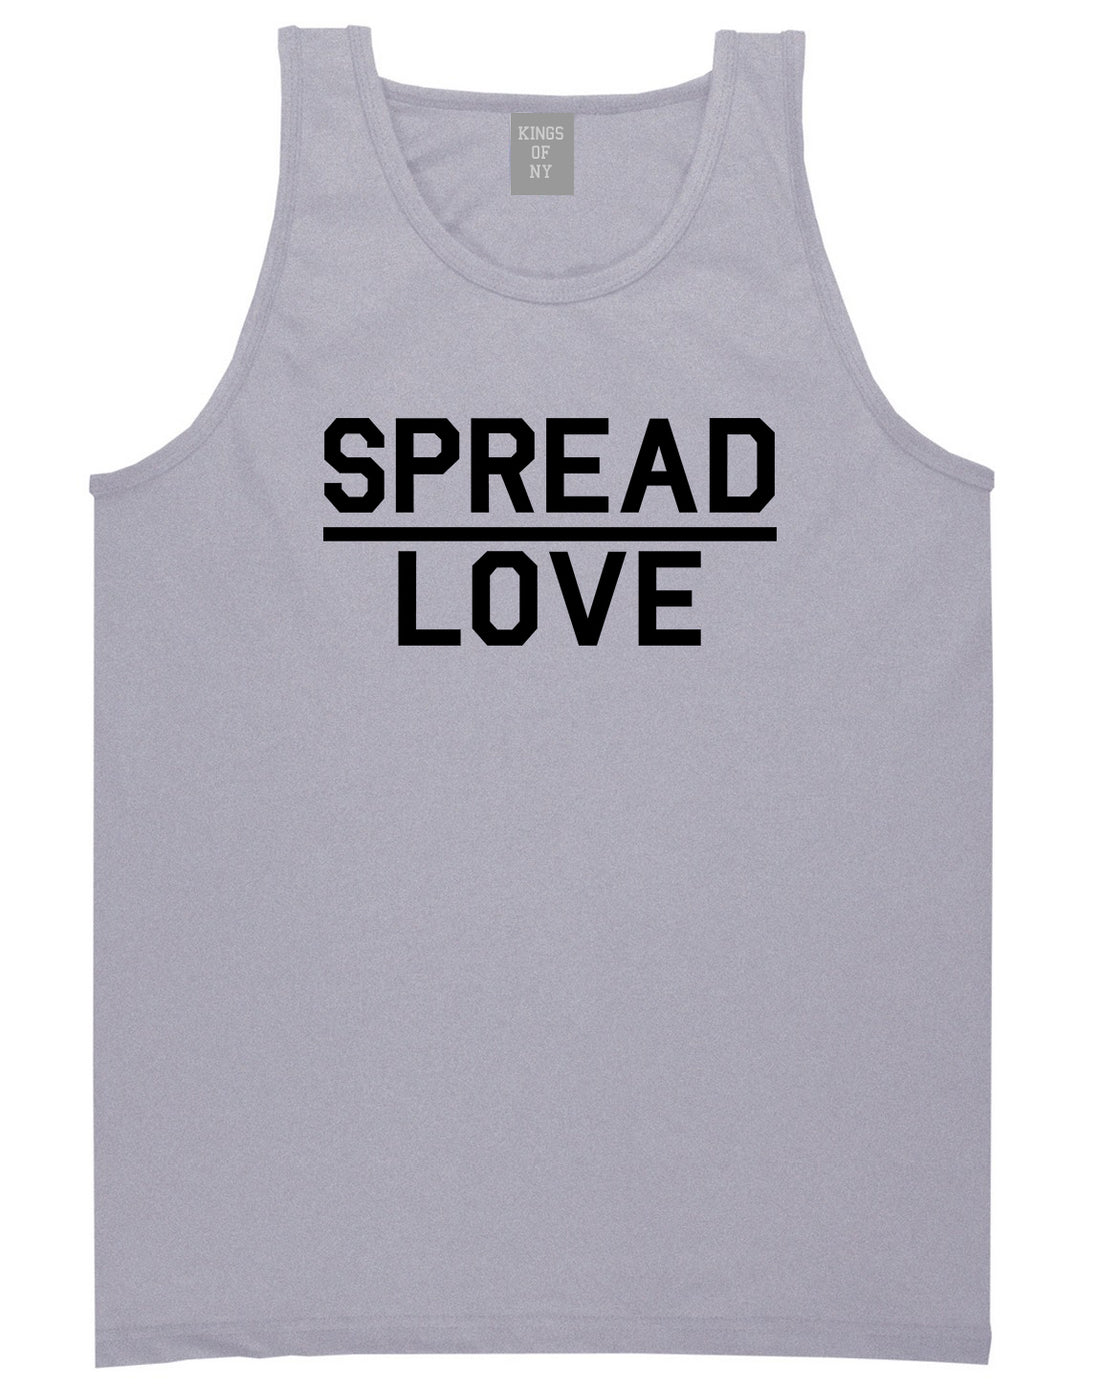 Spread Love Brooklyn Tank Top Shirt in Grey